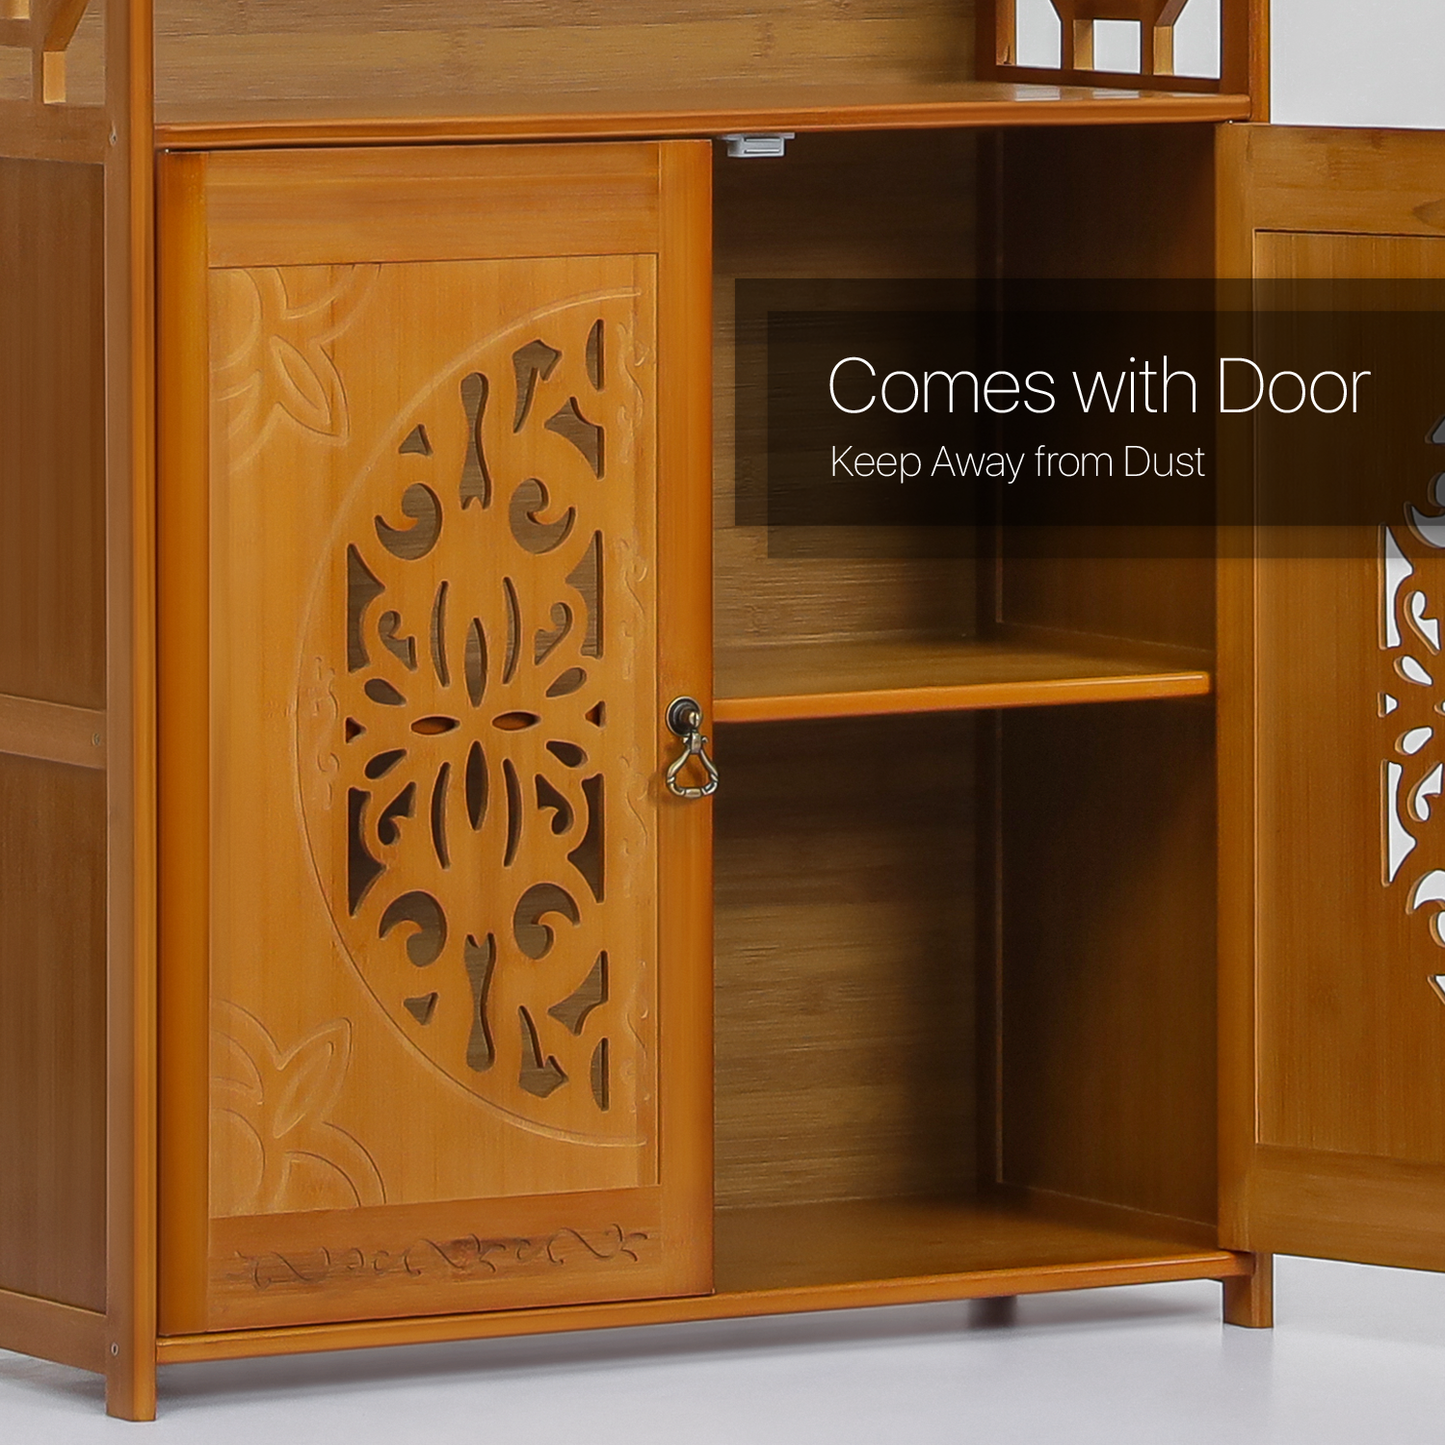 Oriental Multi-Functional Storage - with Engraved Cabinet Door - 5 Tier